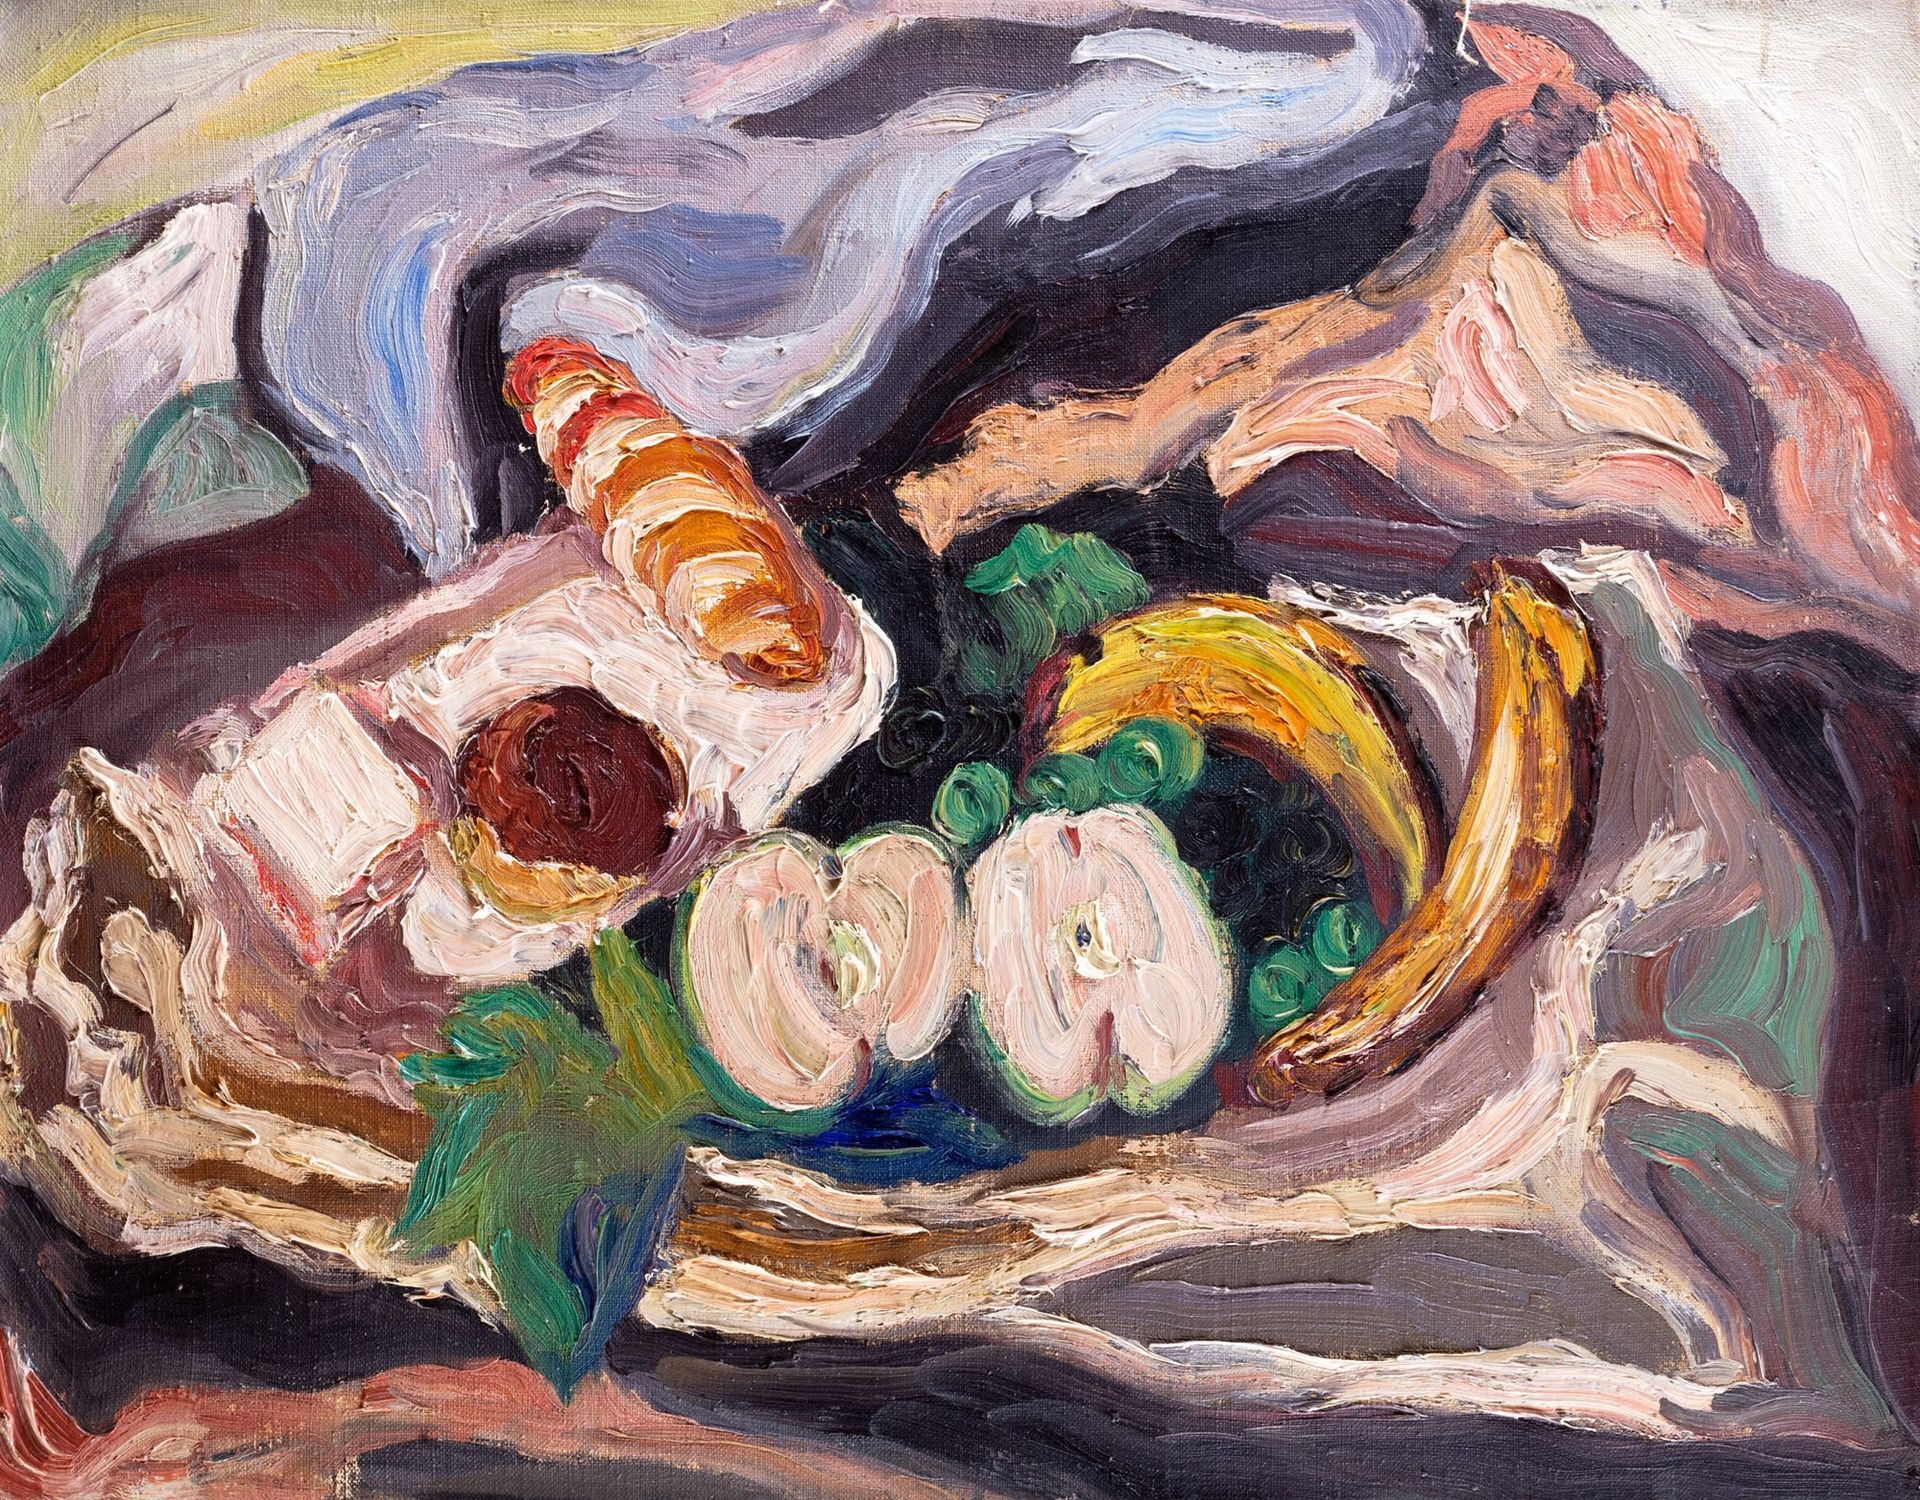 CARLO LEVI 有水果和糖果的静物，1933年

布面油画
50 x 65 cm
背面签名：C. Levi，编号331115



 

在Carlo L&hellip;